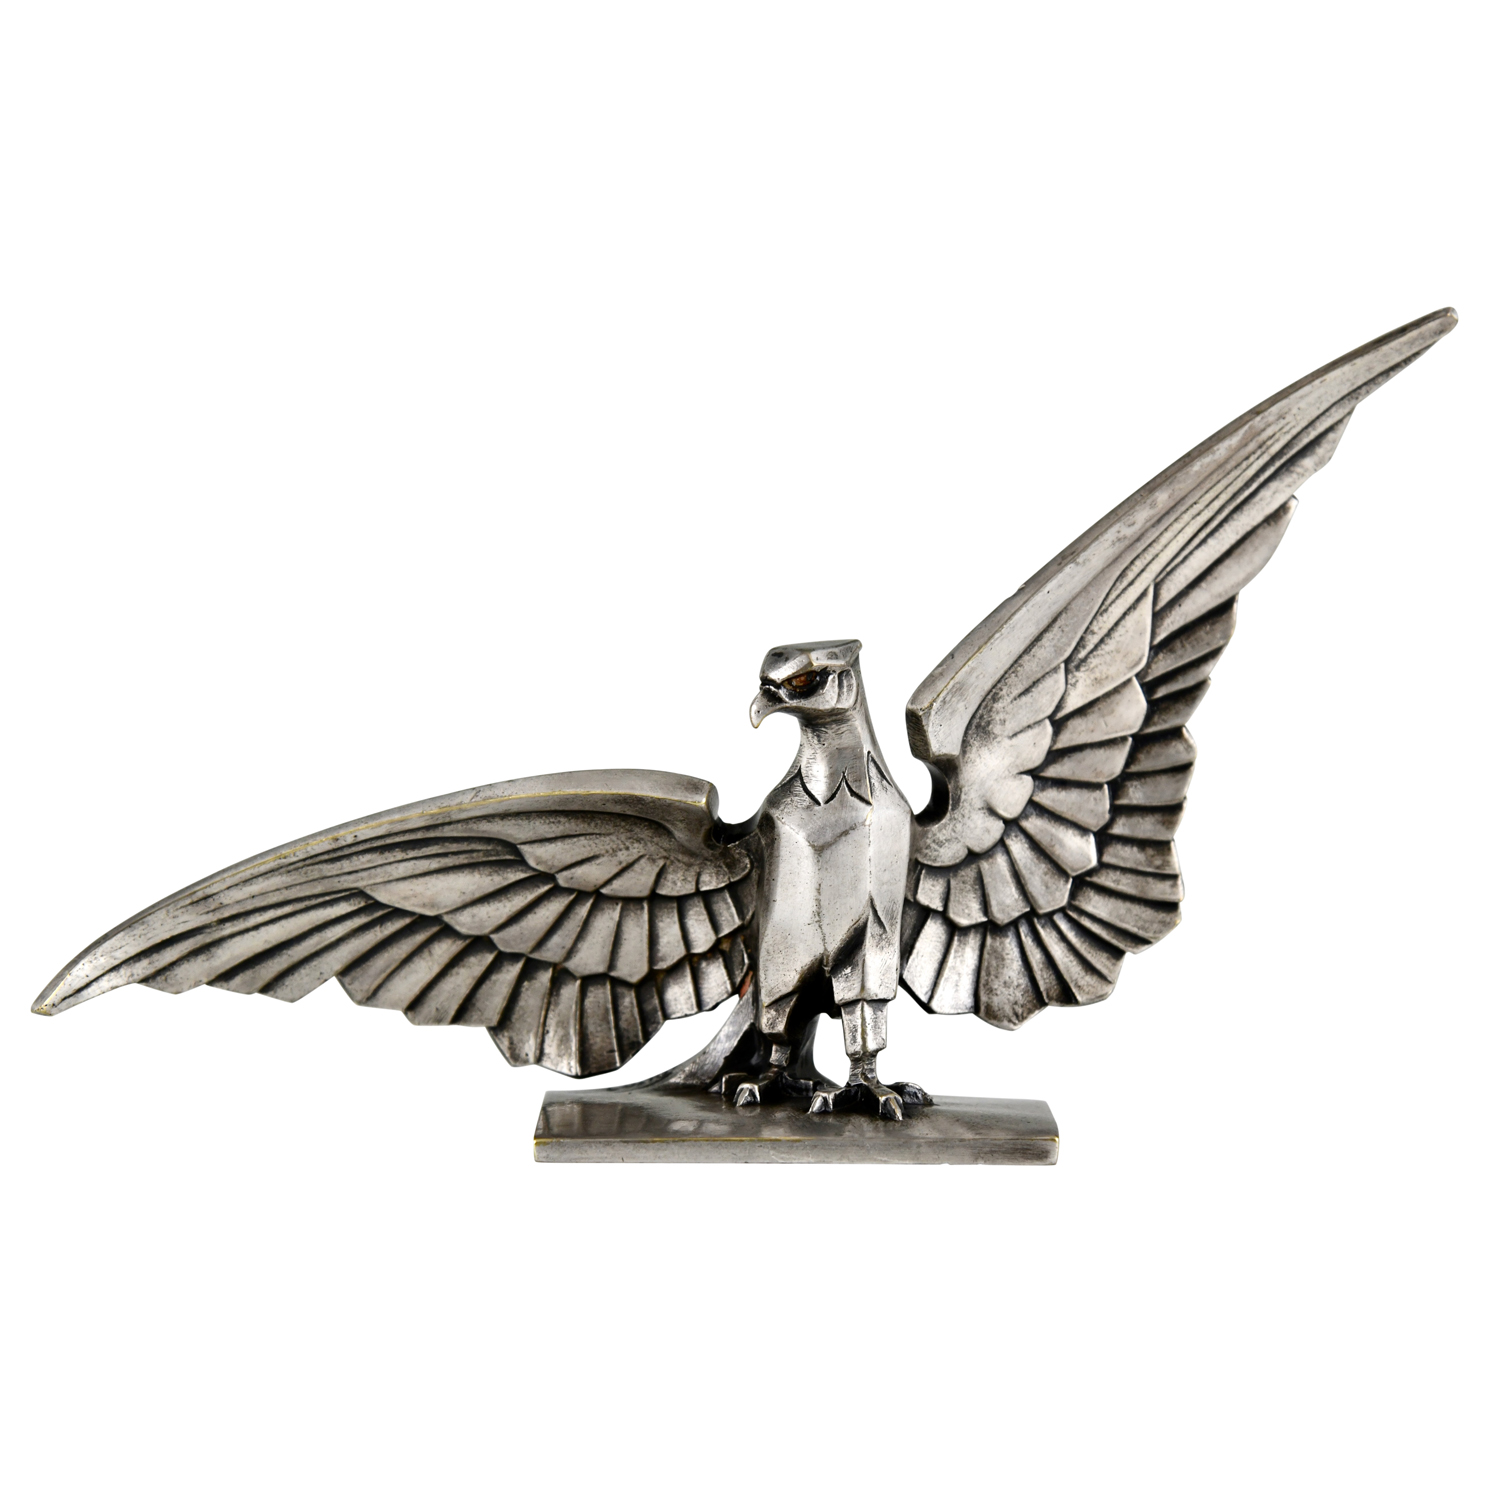 Art Deco Hattot eagle bronze sculpture - 1